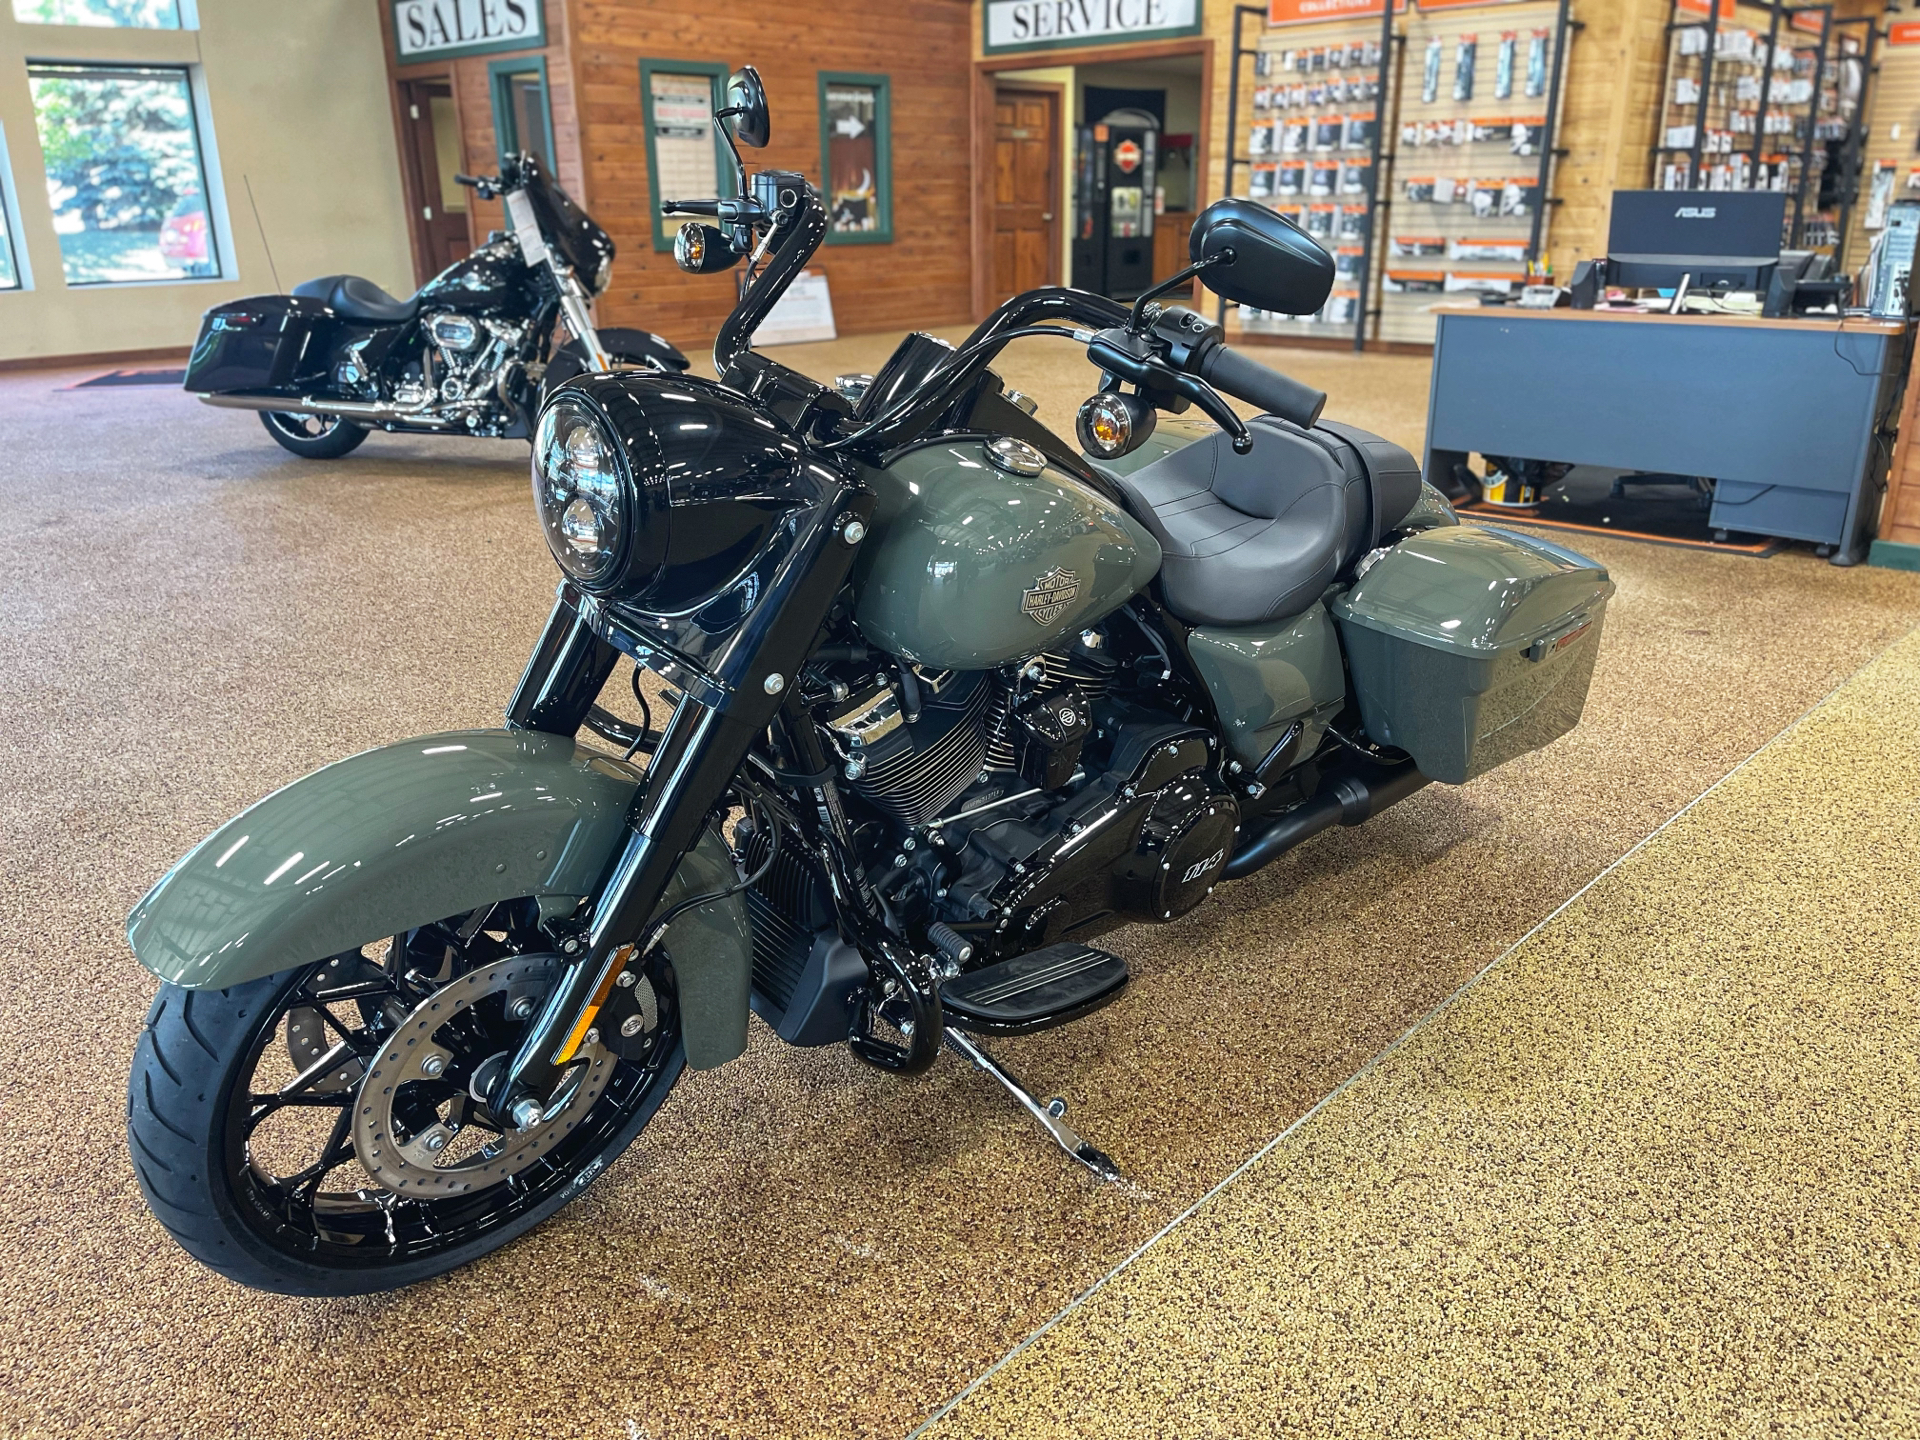 New 2021 Harley Davidson Road King Special Deadwood Green Motorcycles In Sauk Rapids Mn 651371